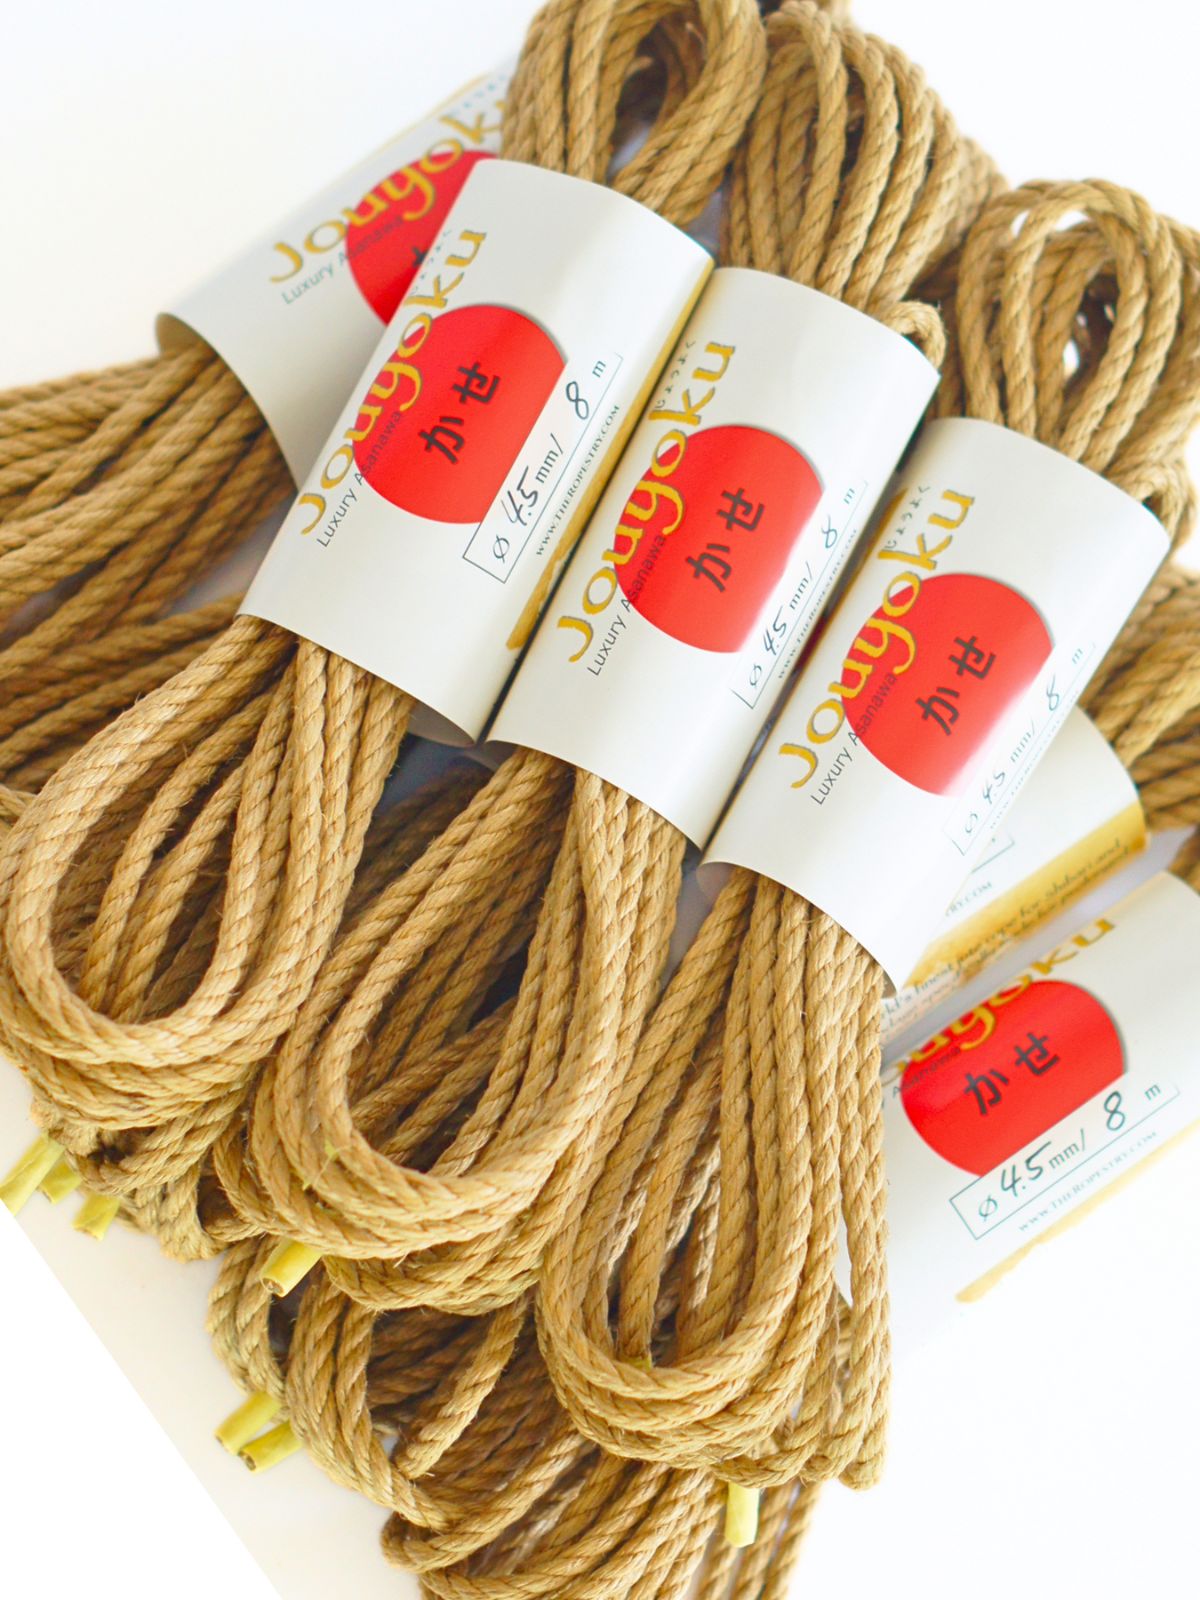 ø 4.5mm JOUYOKU ready-to-use jute rope for Shibari, Kinbaku bondage, various lengths and sets